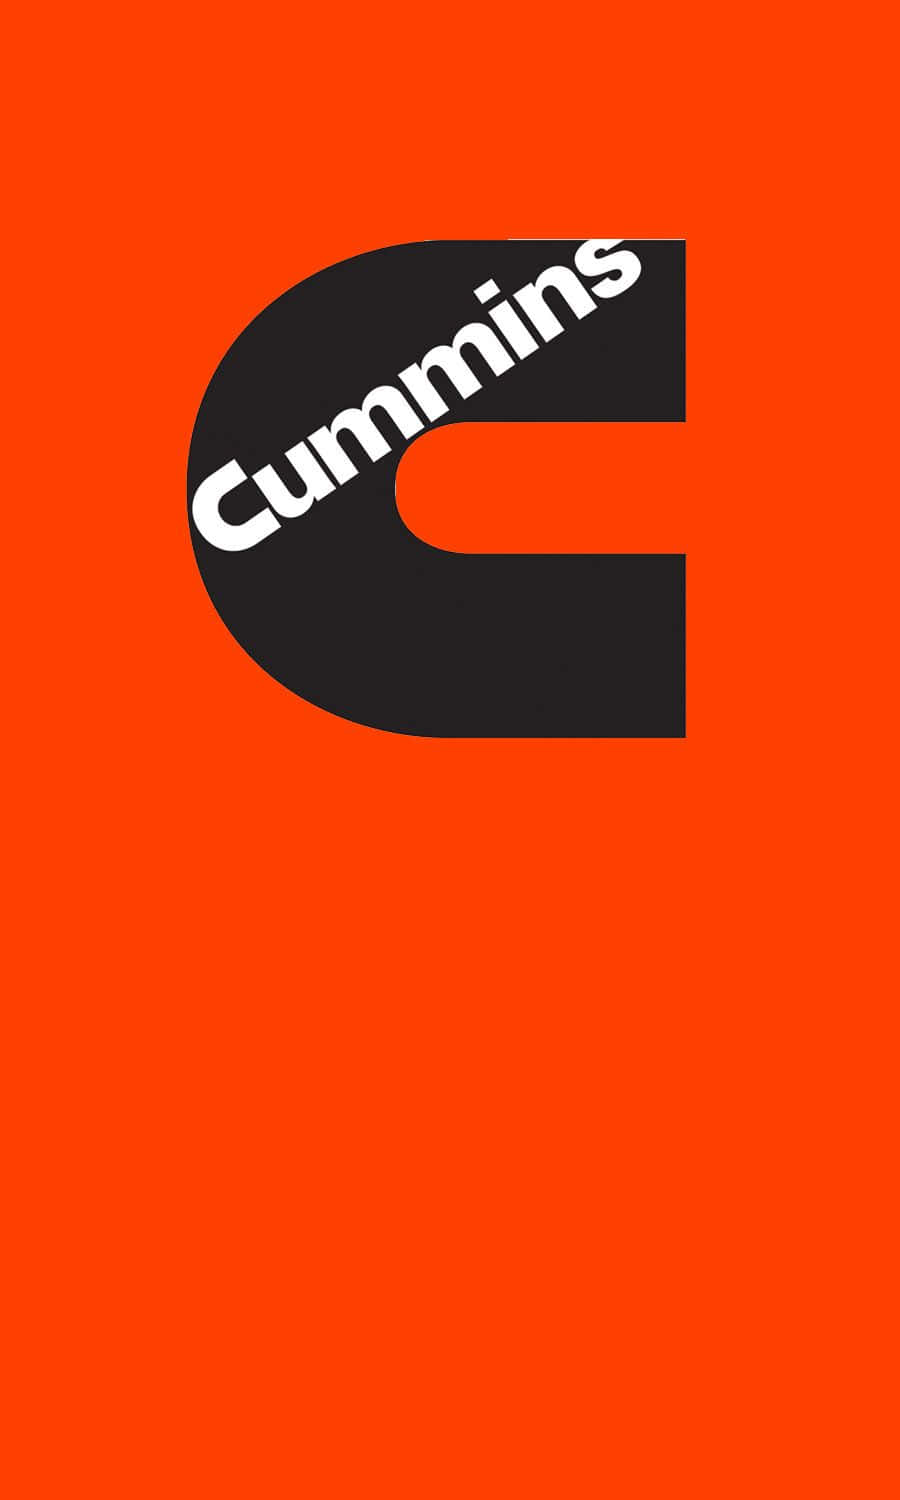 Cumminsschwarzes C-logo Wallpaper